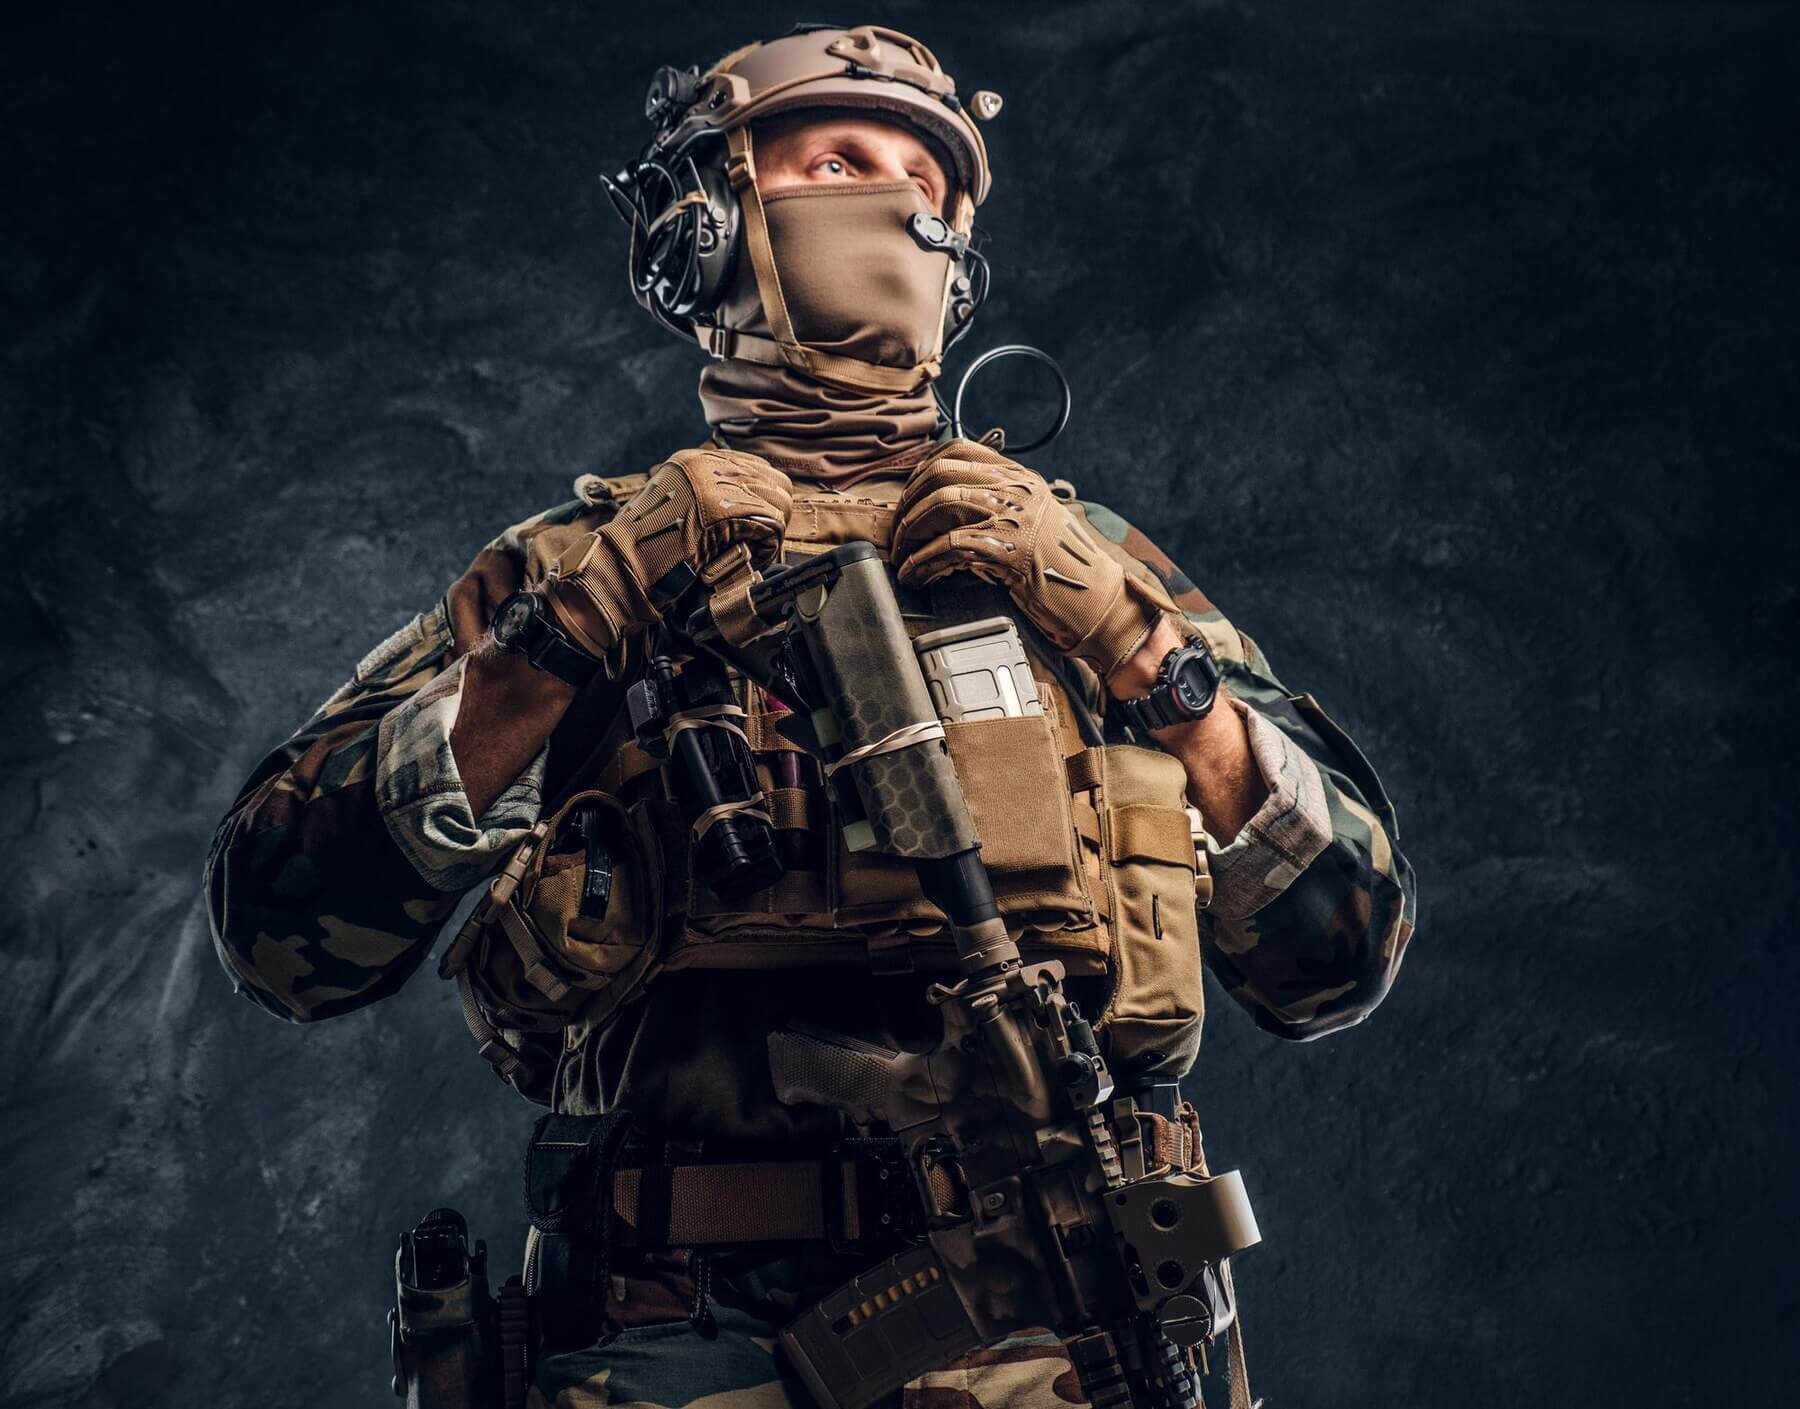 elite-unit-special-forces-soldier-camouflage-uniform-studio-photo-against-dark-textured-wall_613910-20251.jpg